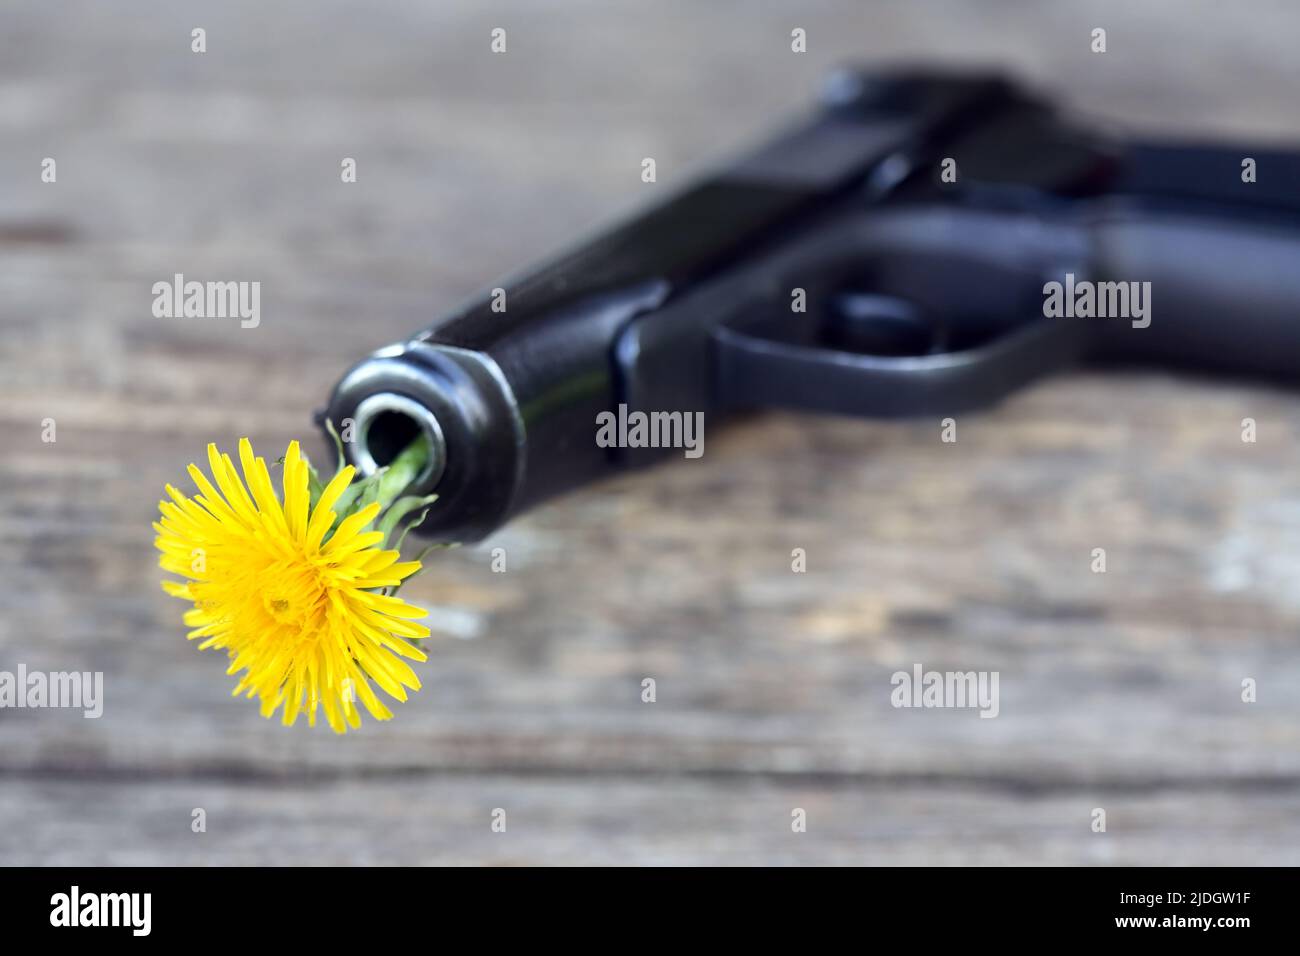 Symbol of disarmament. Nice yellow dandelion in the barrel of a gun Stock Photo